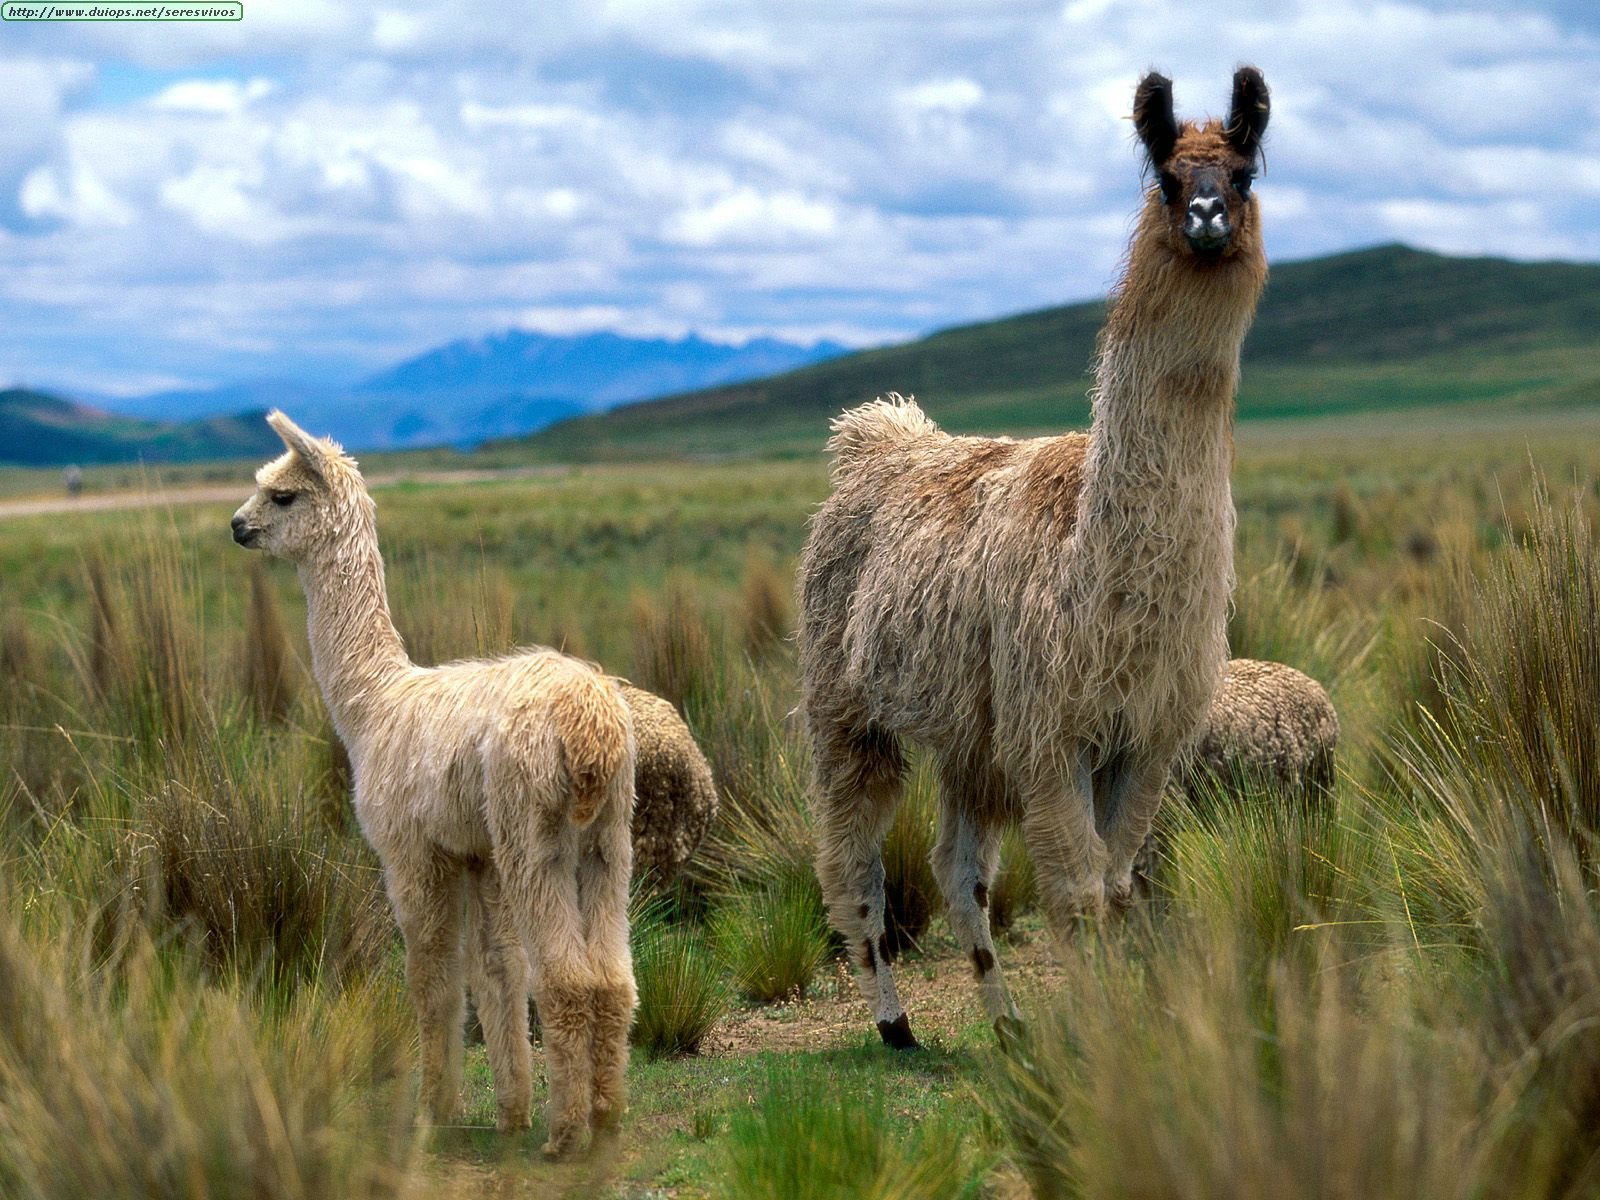 [J.F.] Simon pide! - Página 6 Animals%20South%20American_Llamas,%20Andes%20Mountains